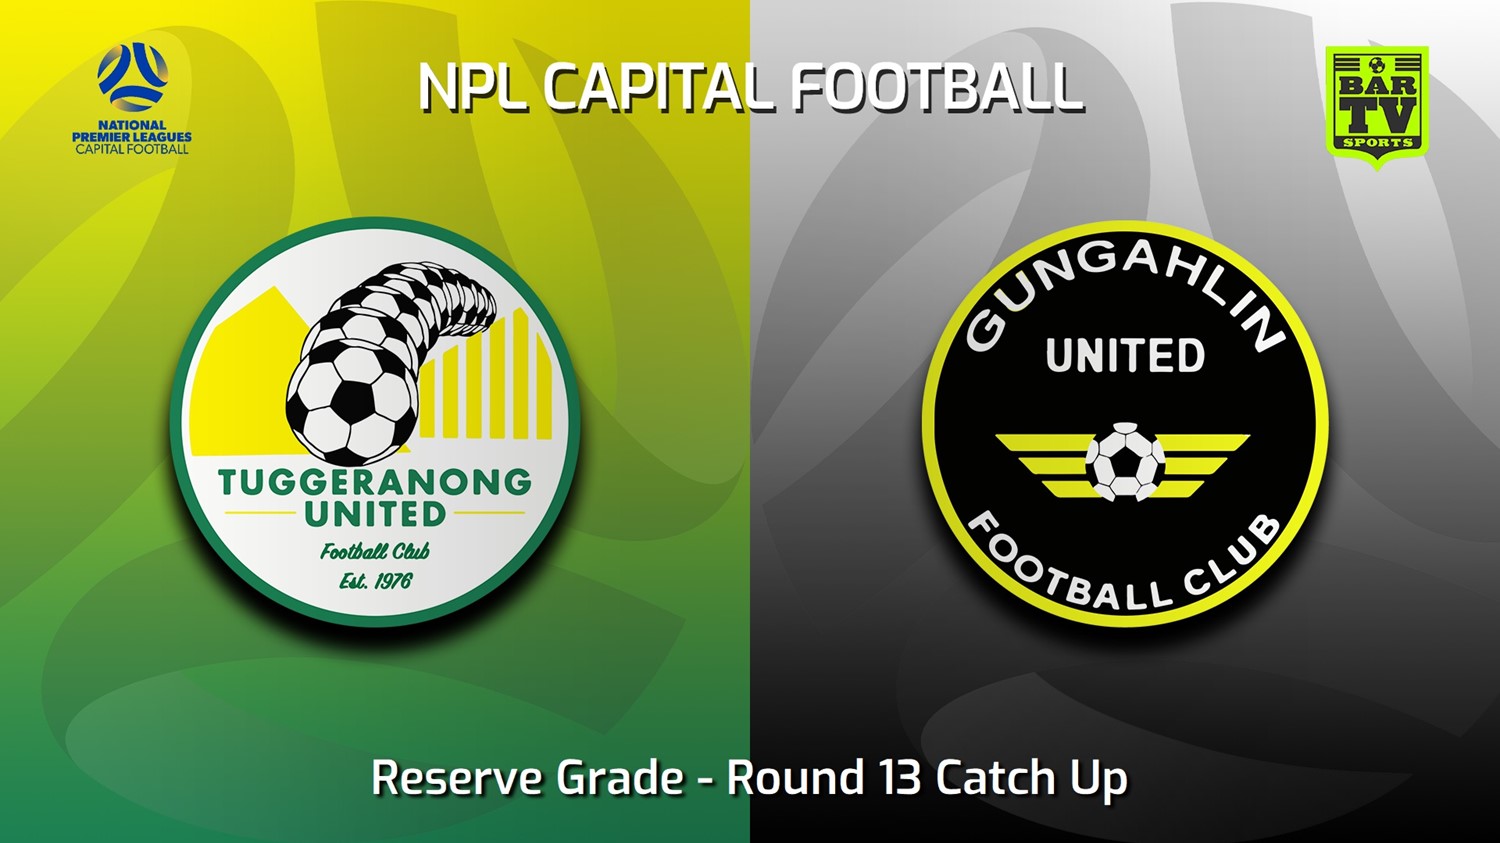 230726-NPL Women - Reserve Grade - Capital Football Round 13 Catch Up - Tuggeranong United FC (women) v Gungahlin United FC (women) Slate Image